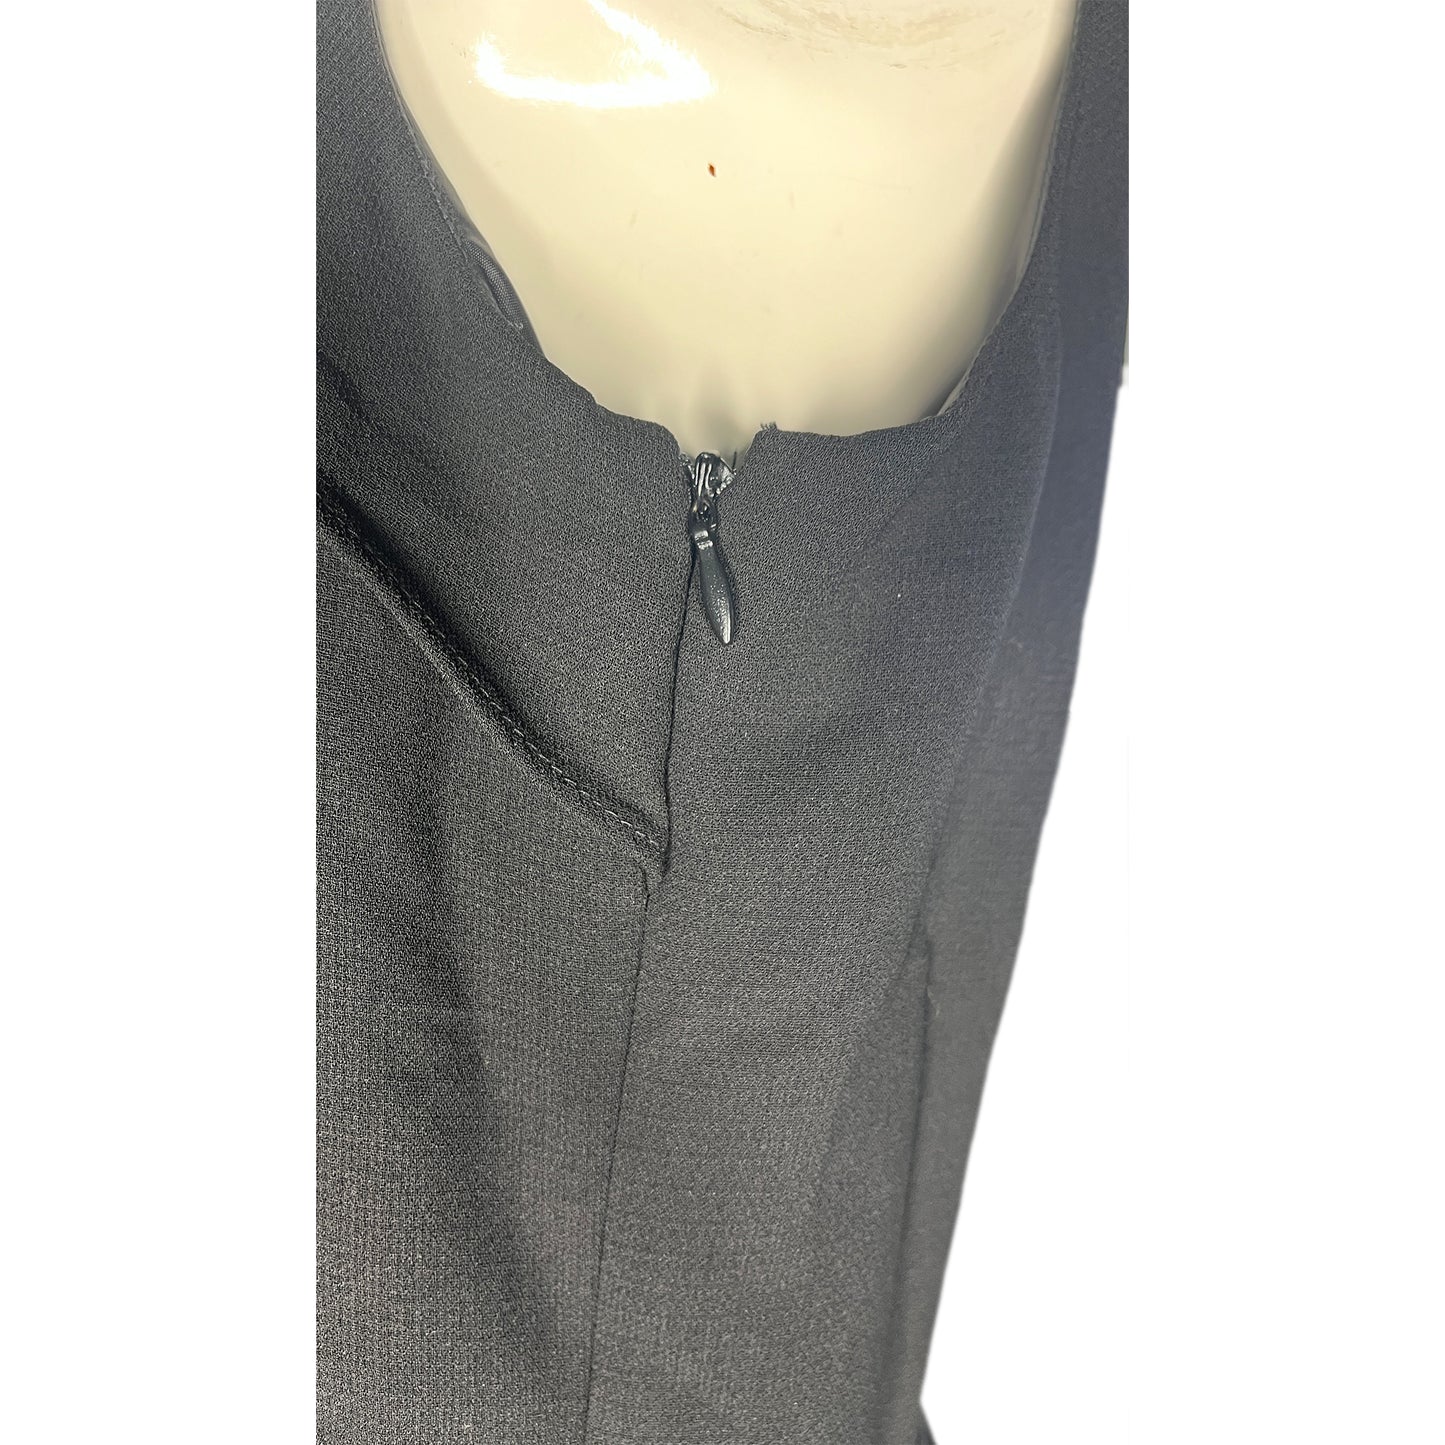 Calvin Klein Dress Above-Knee Ruffle Neck w Belt Black Size 8 SKU 000138-3